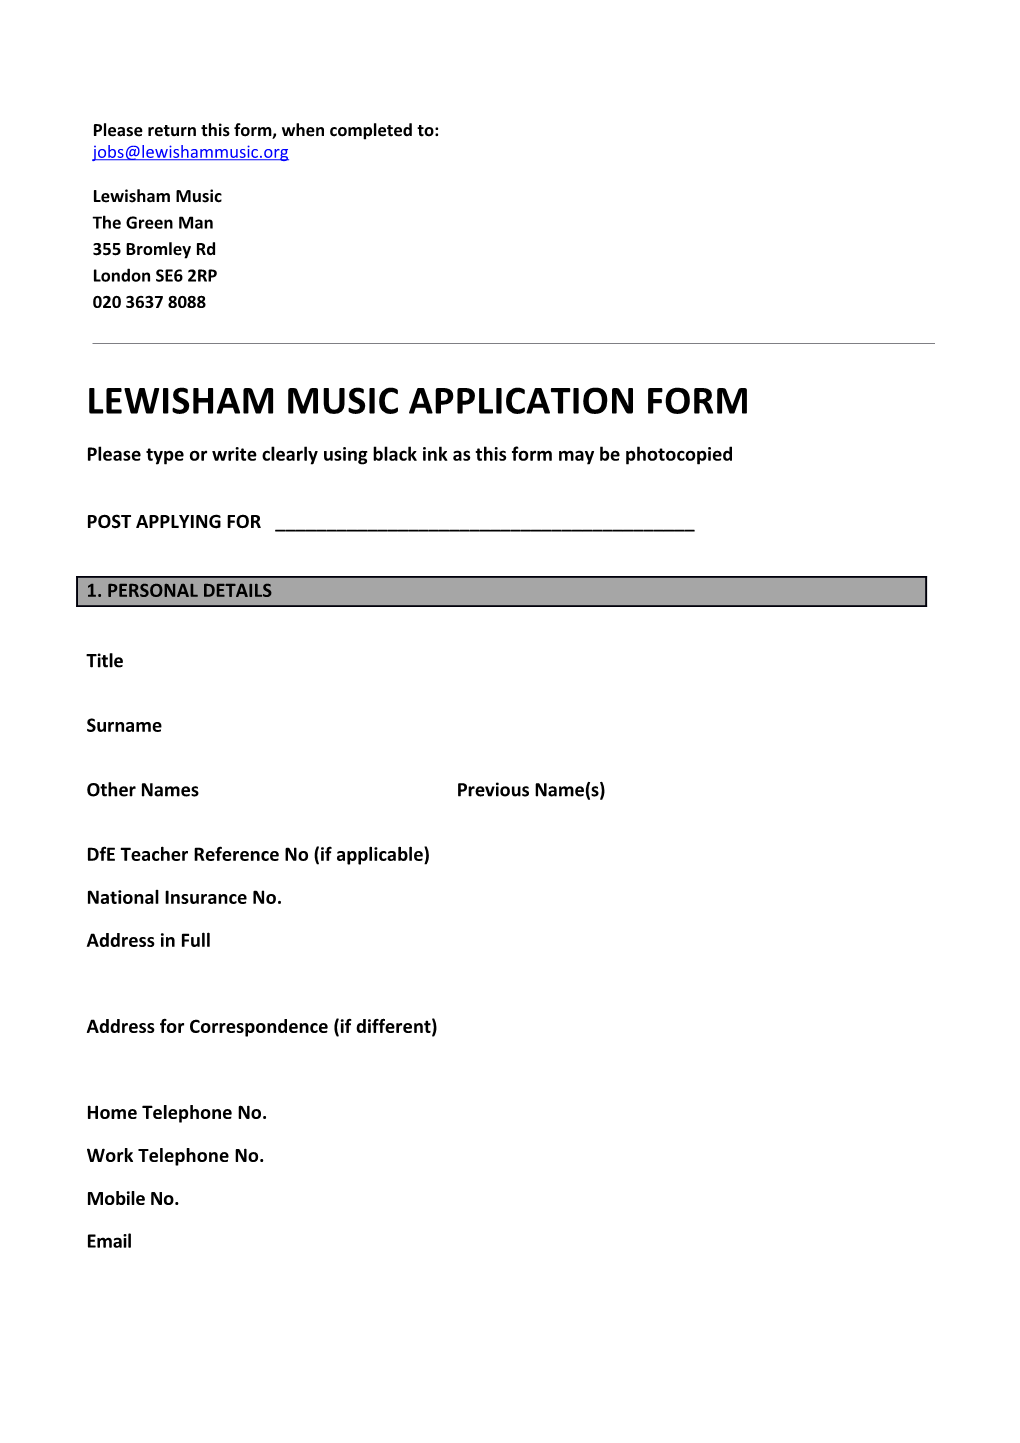 Lewisham Music Application Form